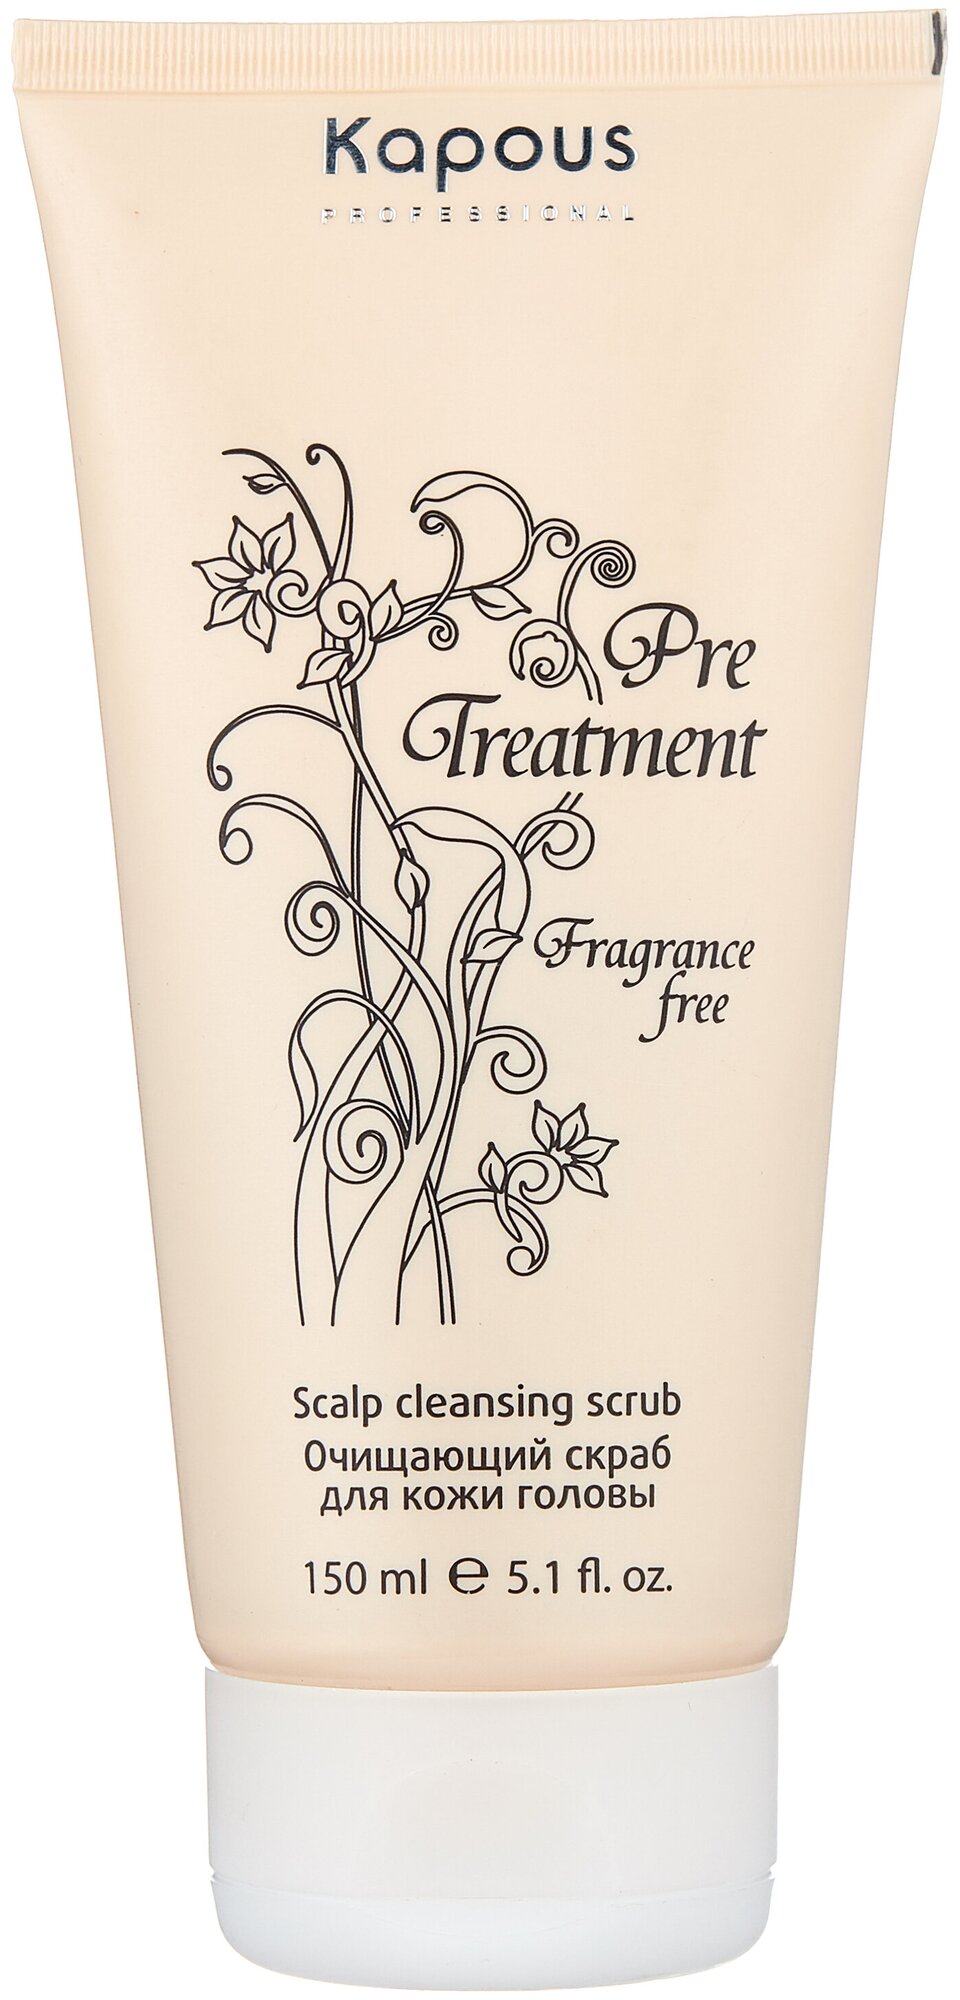 Kapous Fragrance free Pre Treatment Скраб очищающий для кожи головы